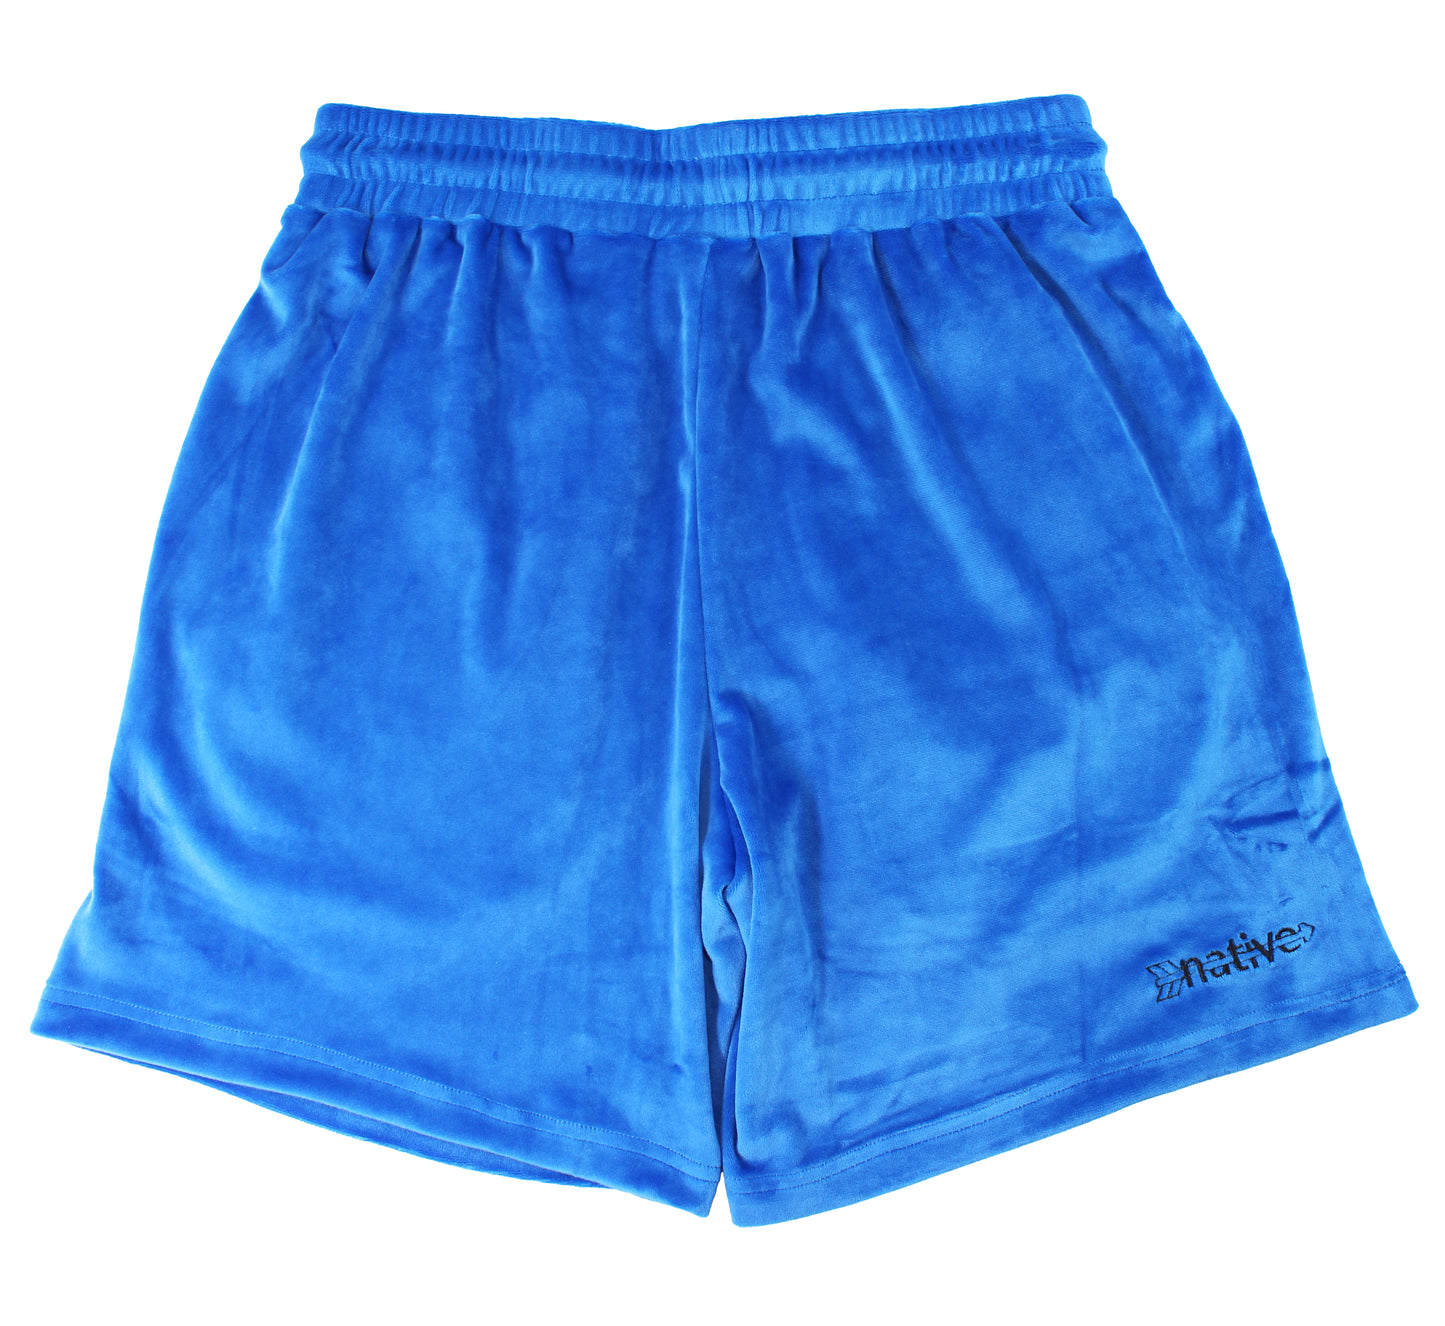 velour shorts in cobalt